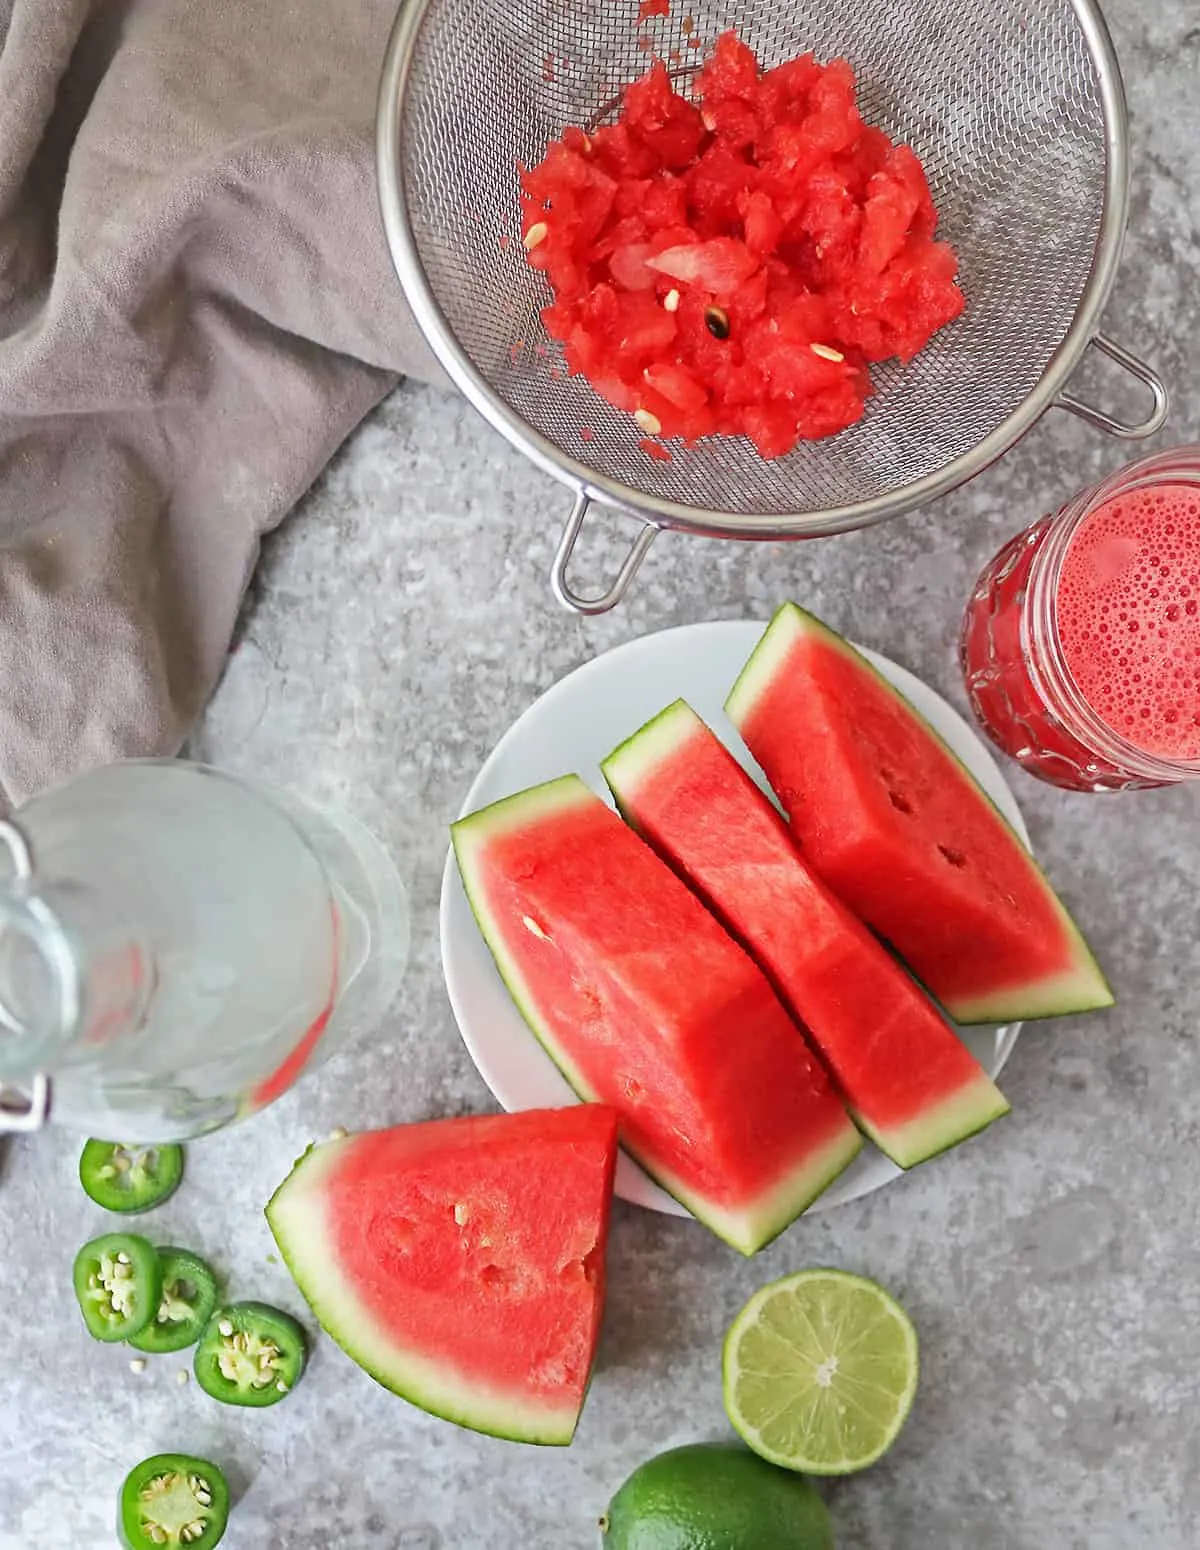 Ingredients to make watermelon paloma mocktail